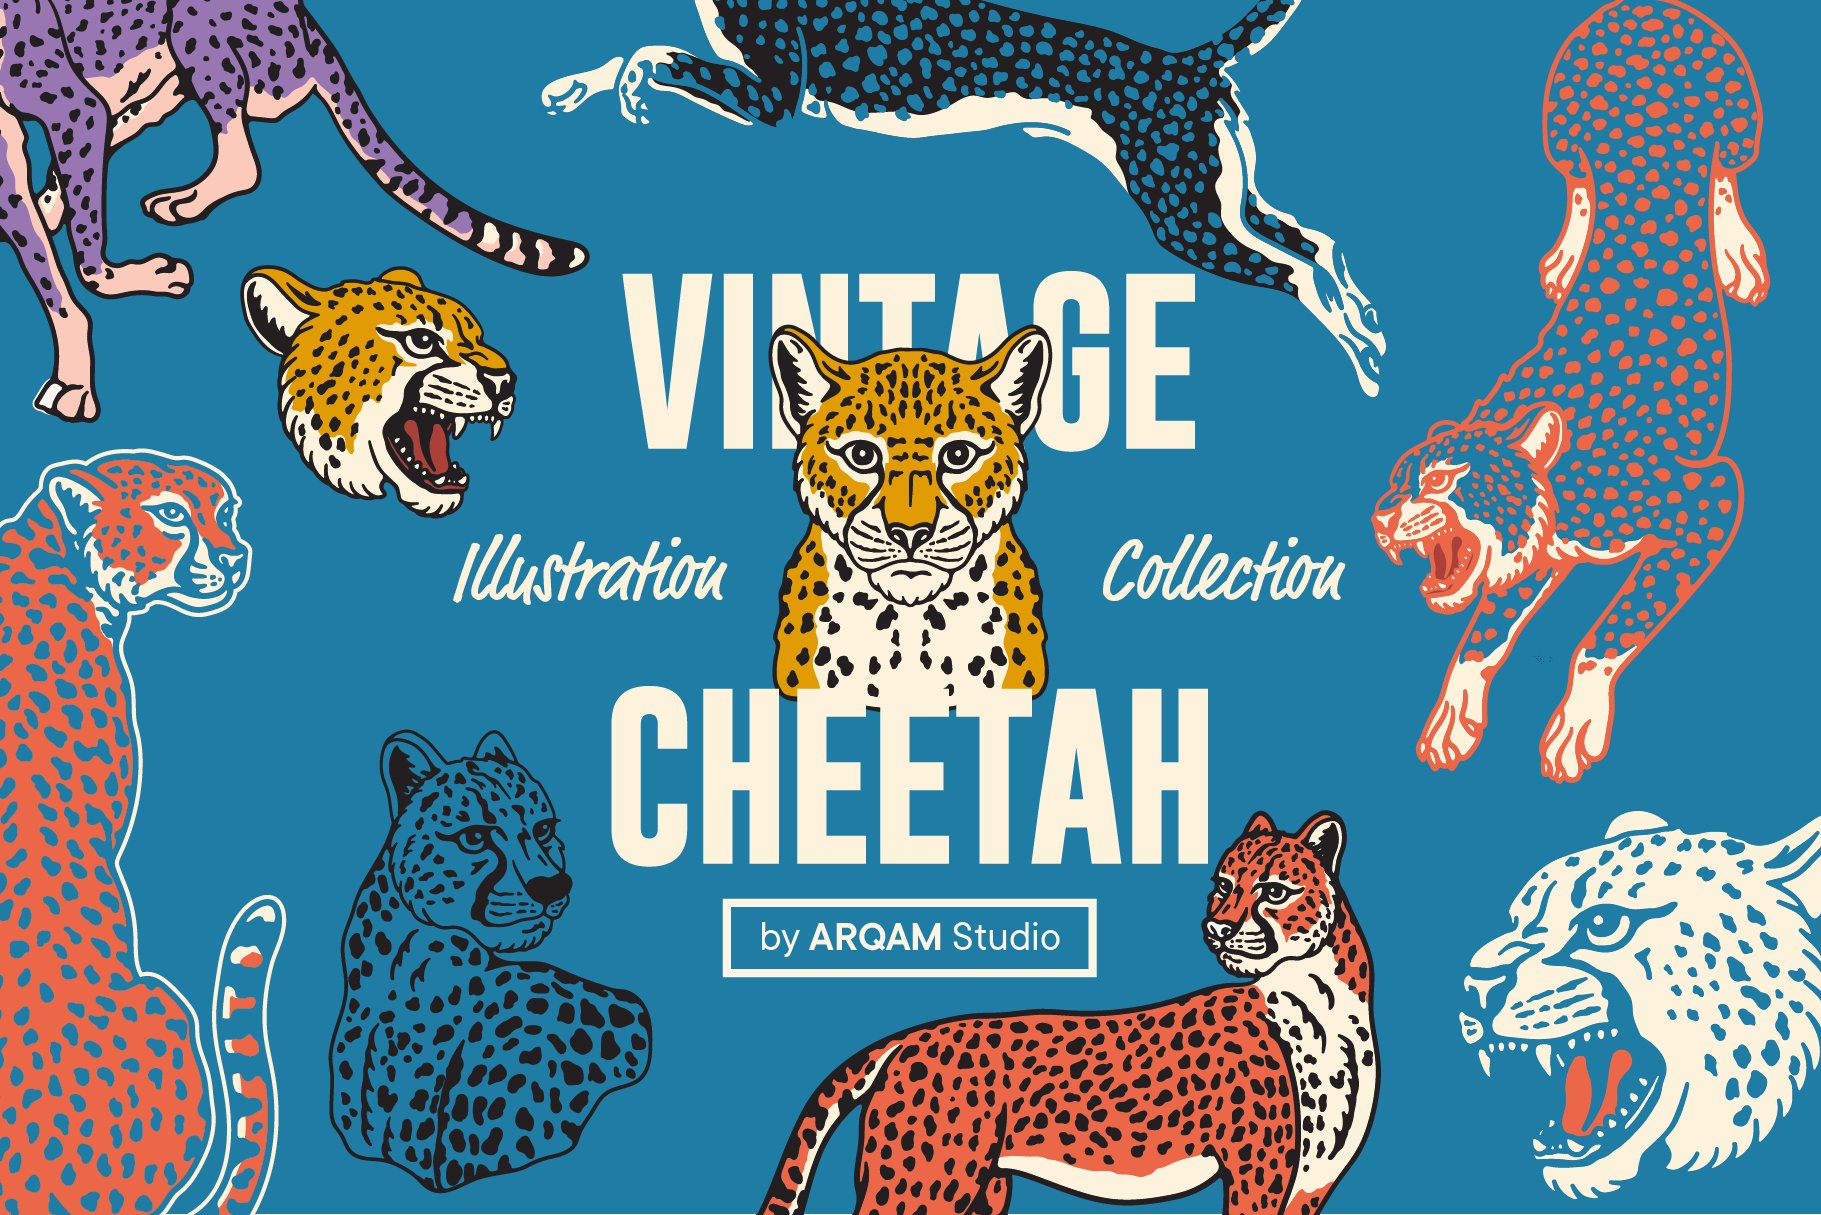 Vintage Cheetah Illustrations cover image.